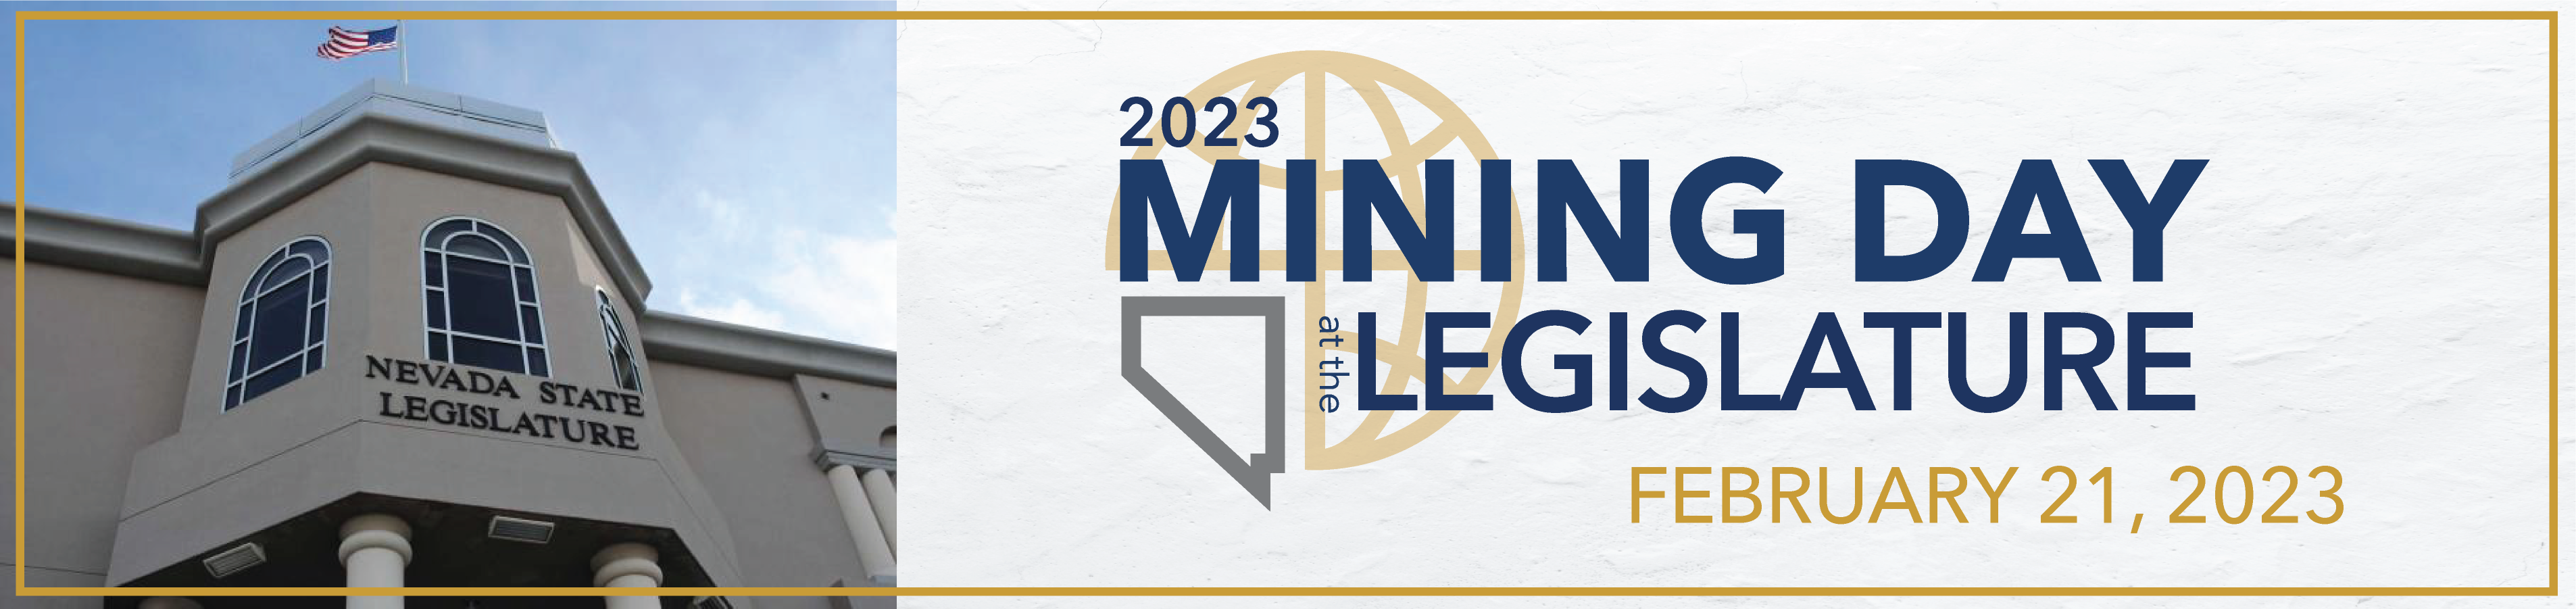 Mining Day at the Legislature Header- 2023 February 21, 2023 Carson City, NV